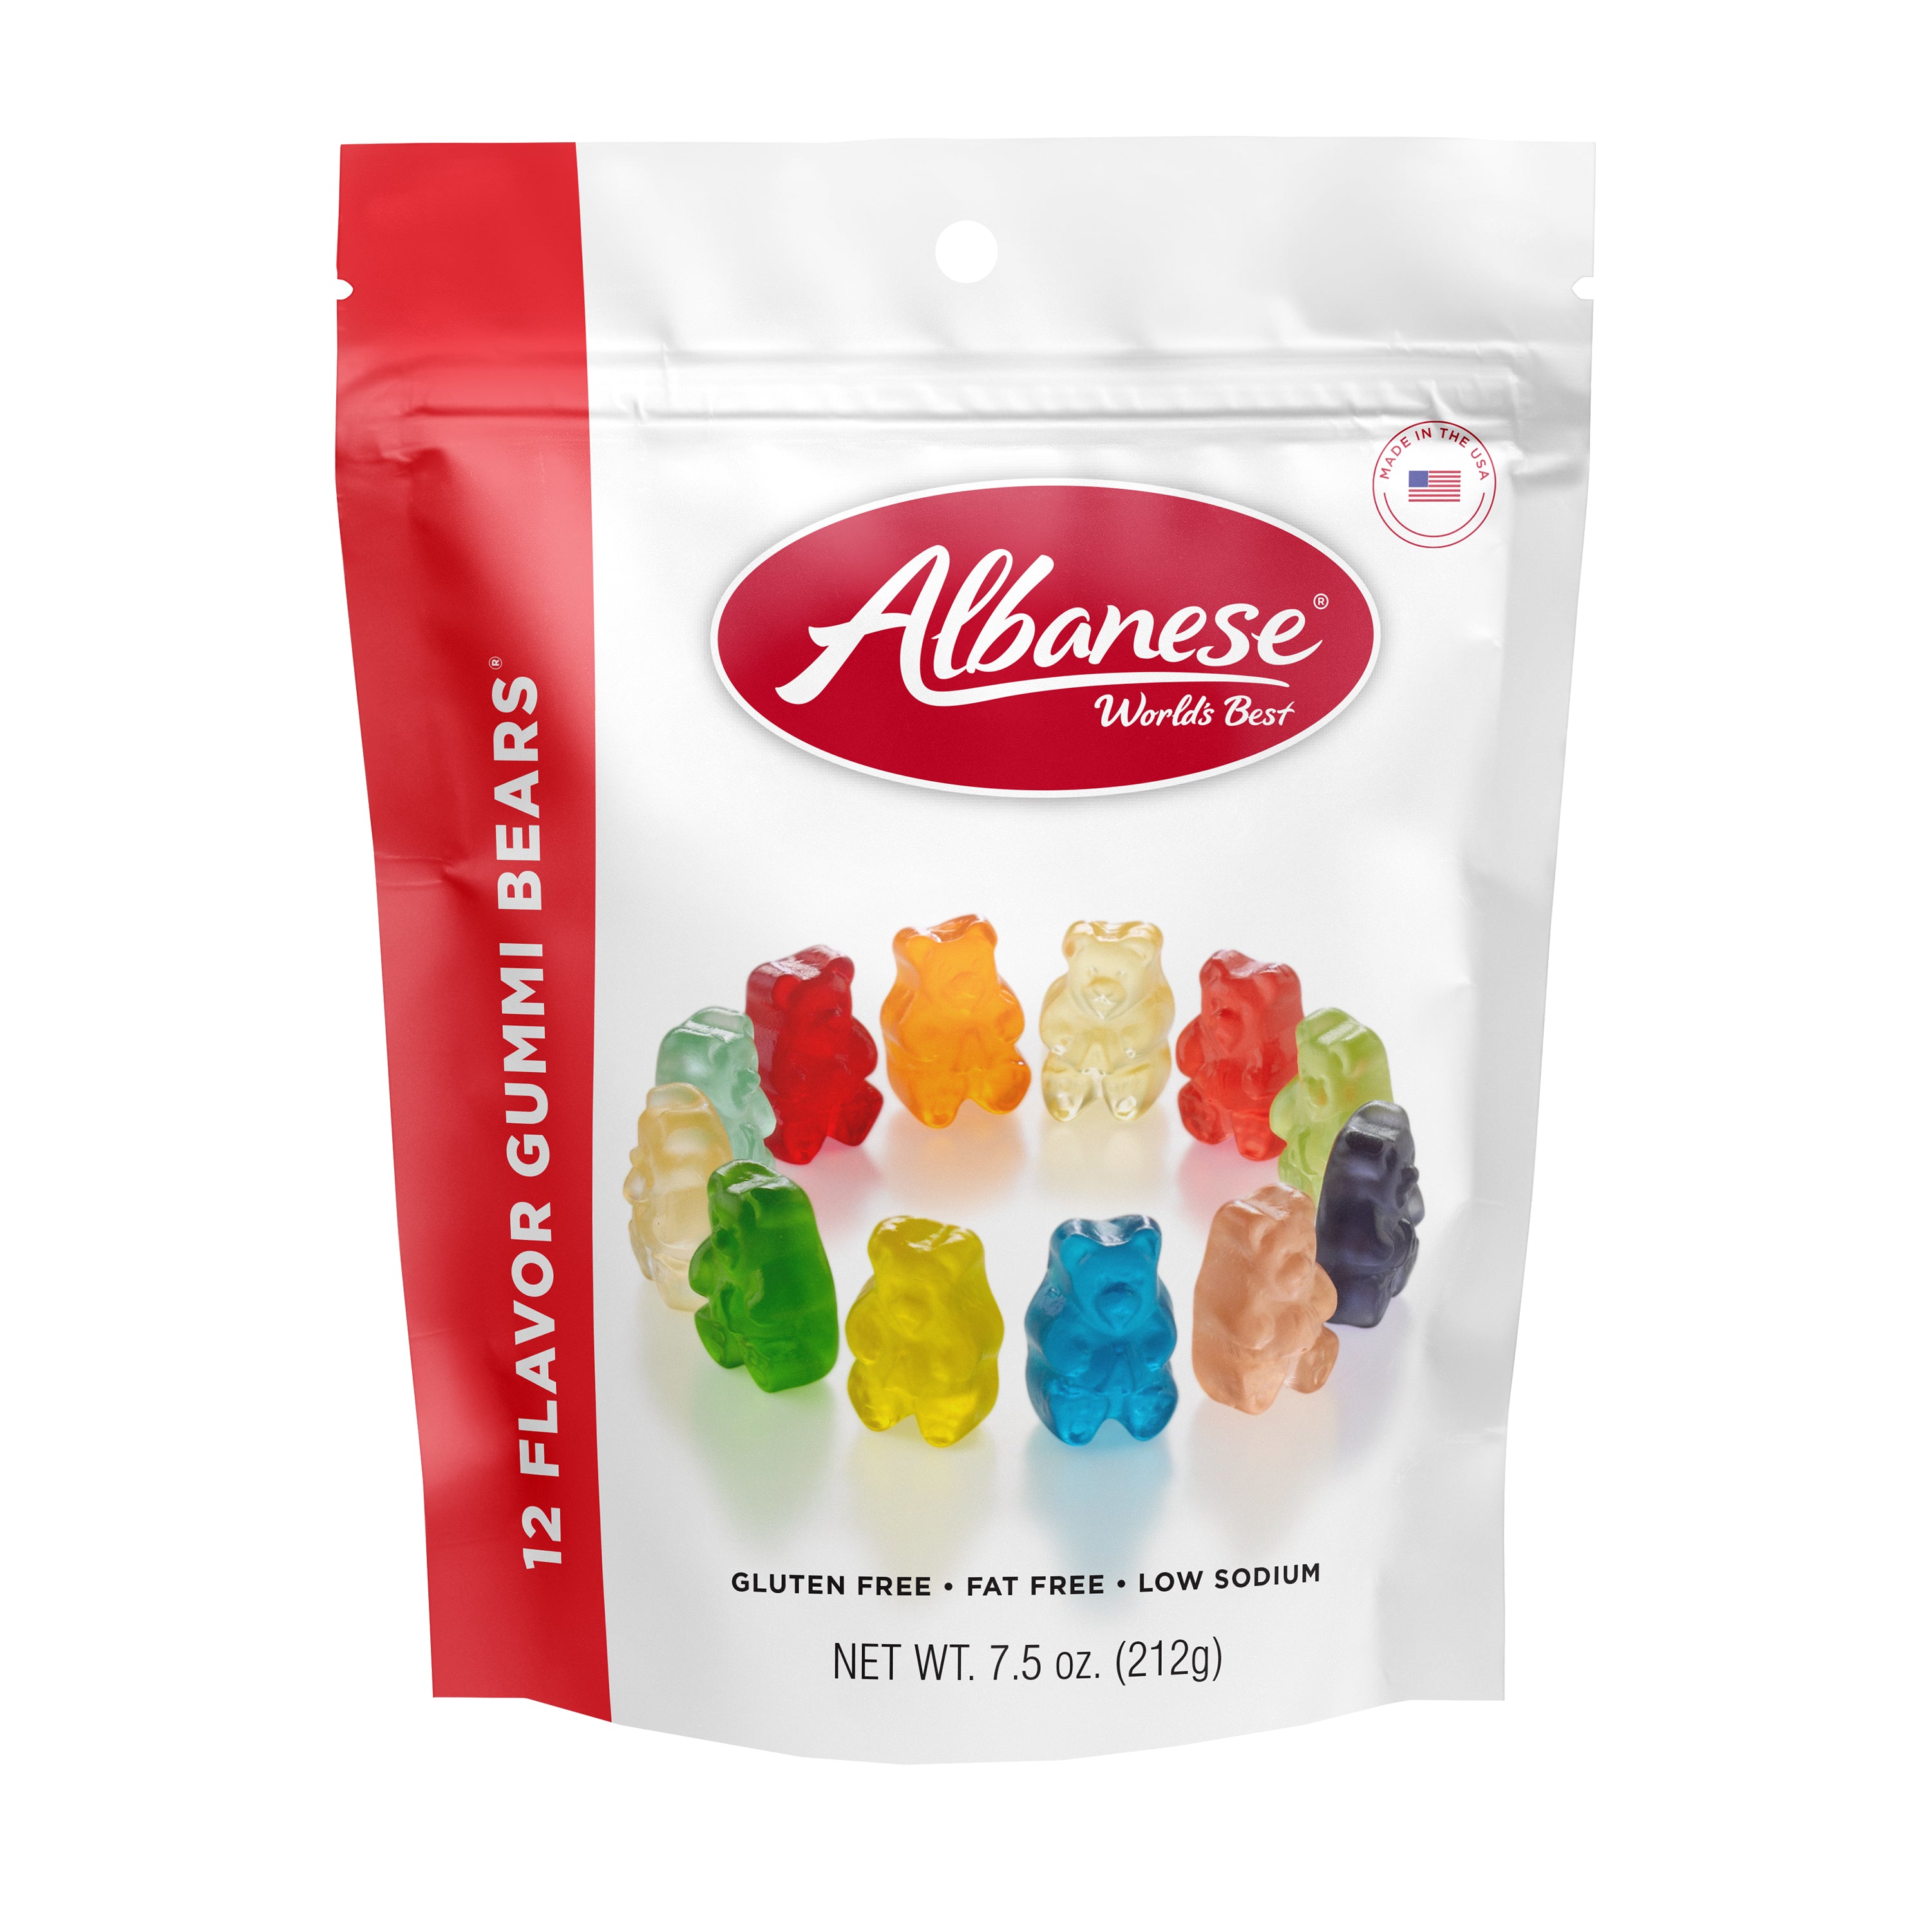 Albanese World’s Best 12 Flavor Gummi Bears, 7.5oz